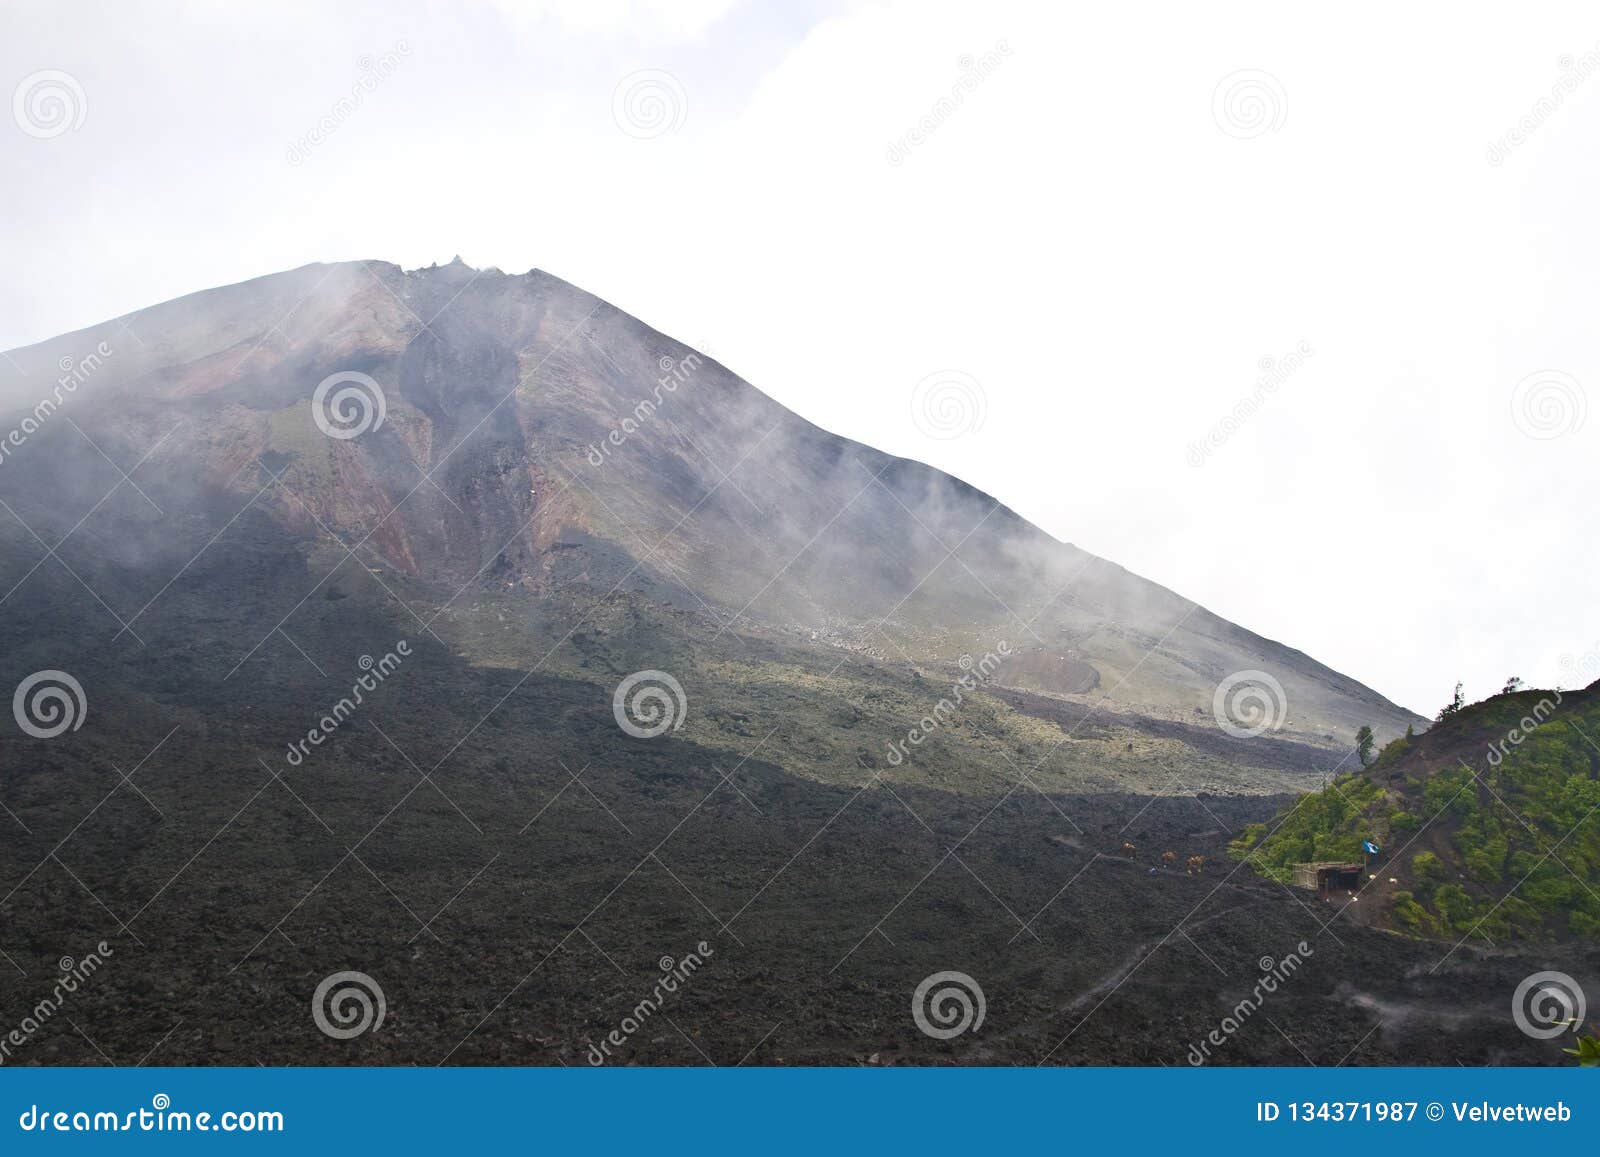 volcano pacaya national park, guatemala